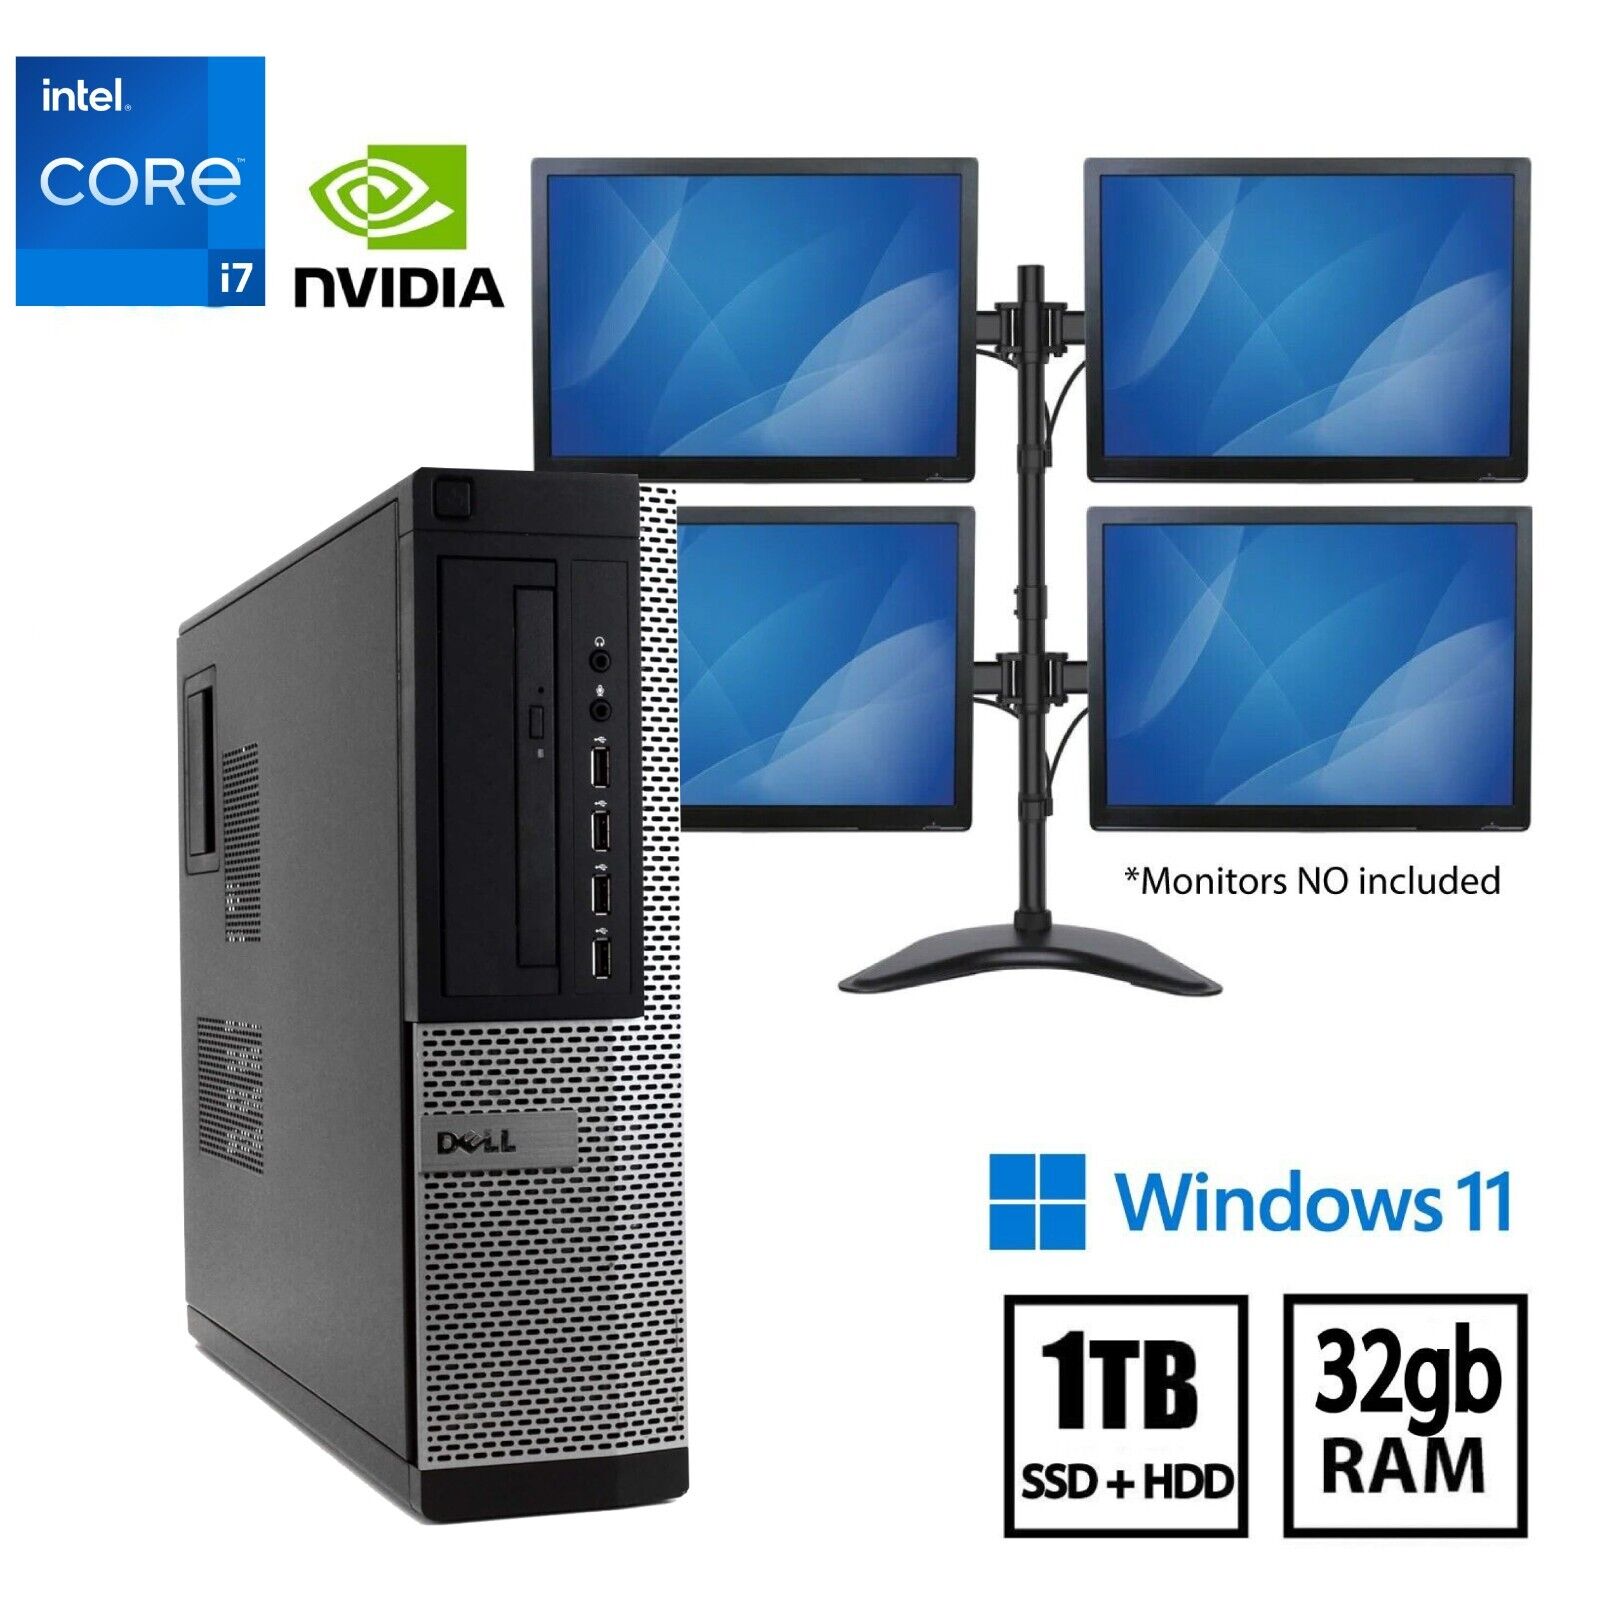 DELL TRADING COMPUTER i7 NVIDIA 4k 4M 32GB RAM 1TB SSD+HDD WINDOWS 11 PRO SALE